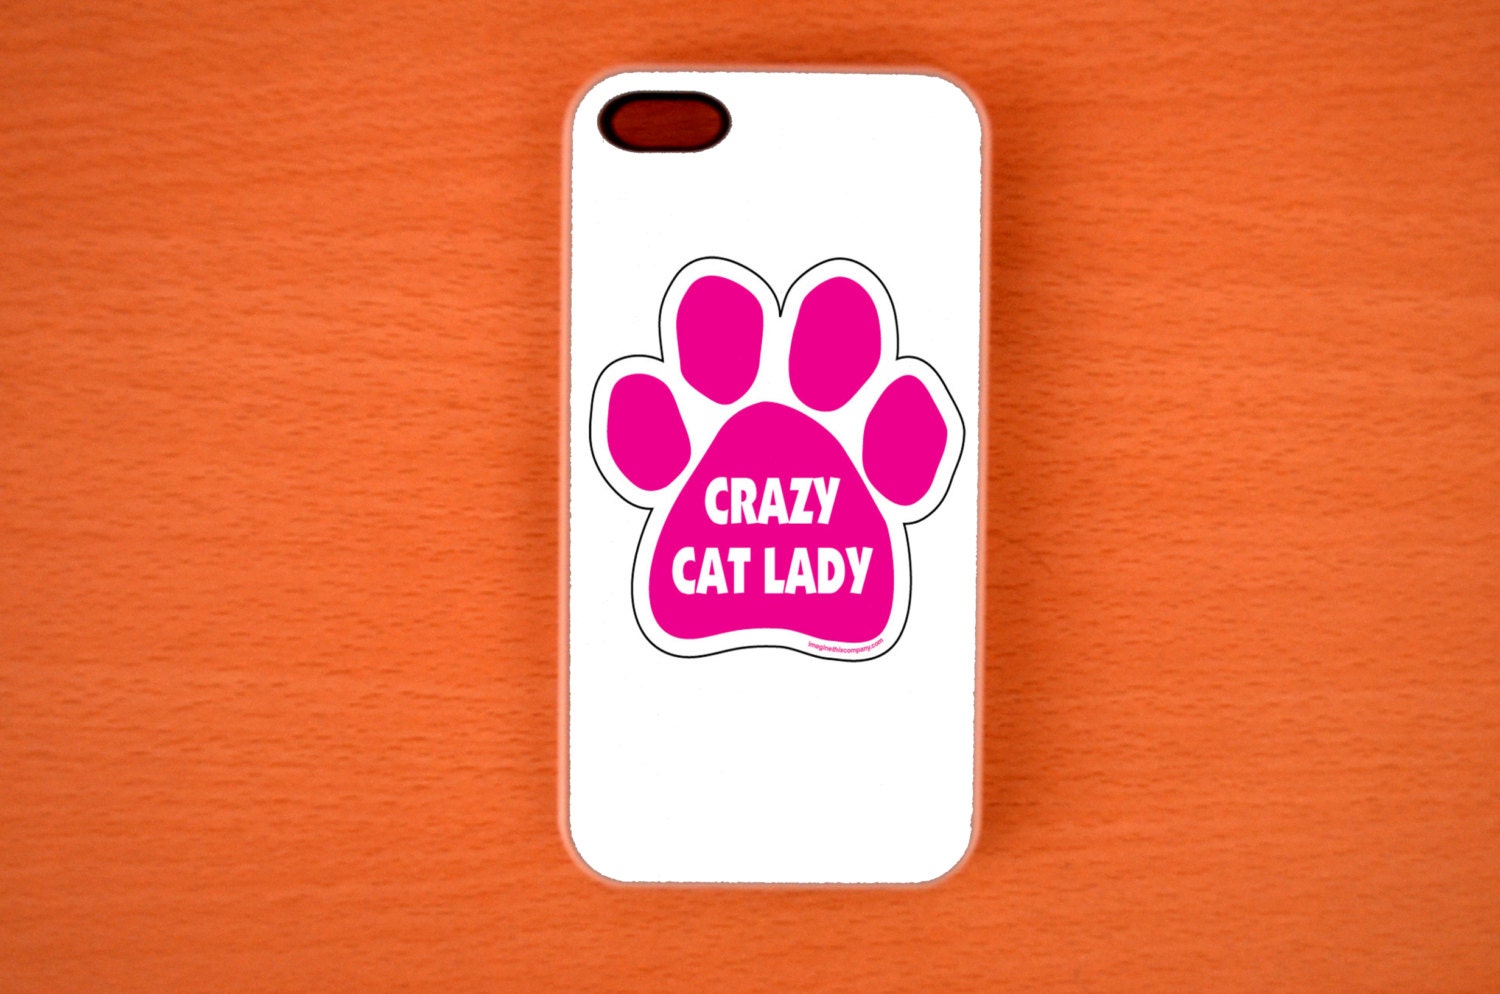 Crazy Cat Lady iPhone 5 Case